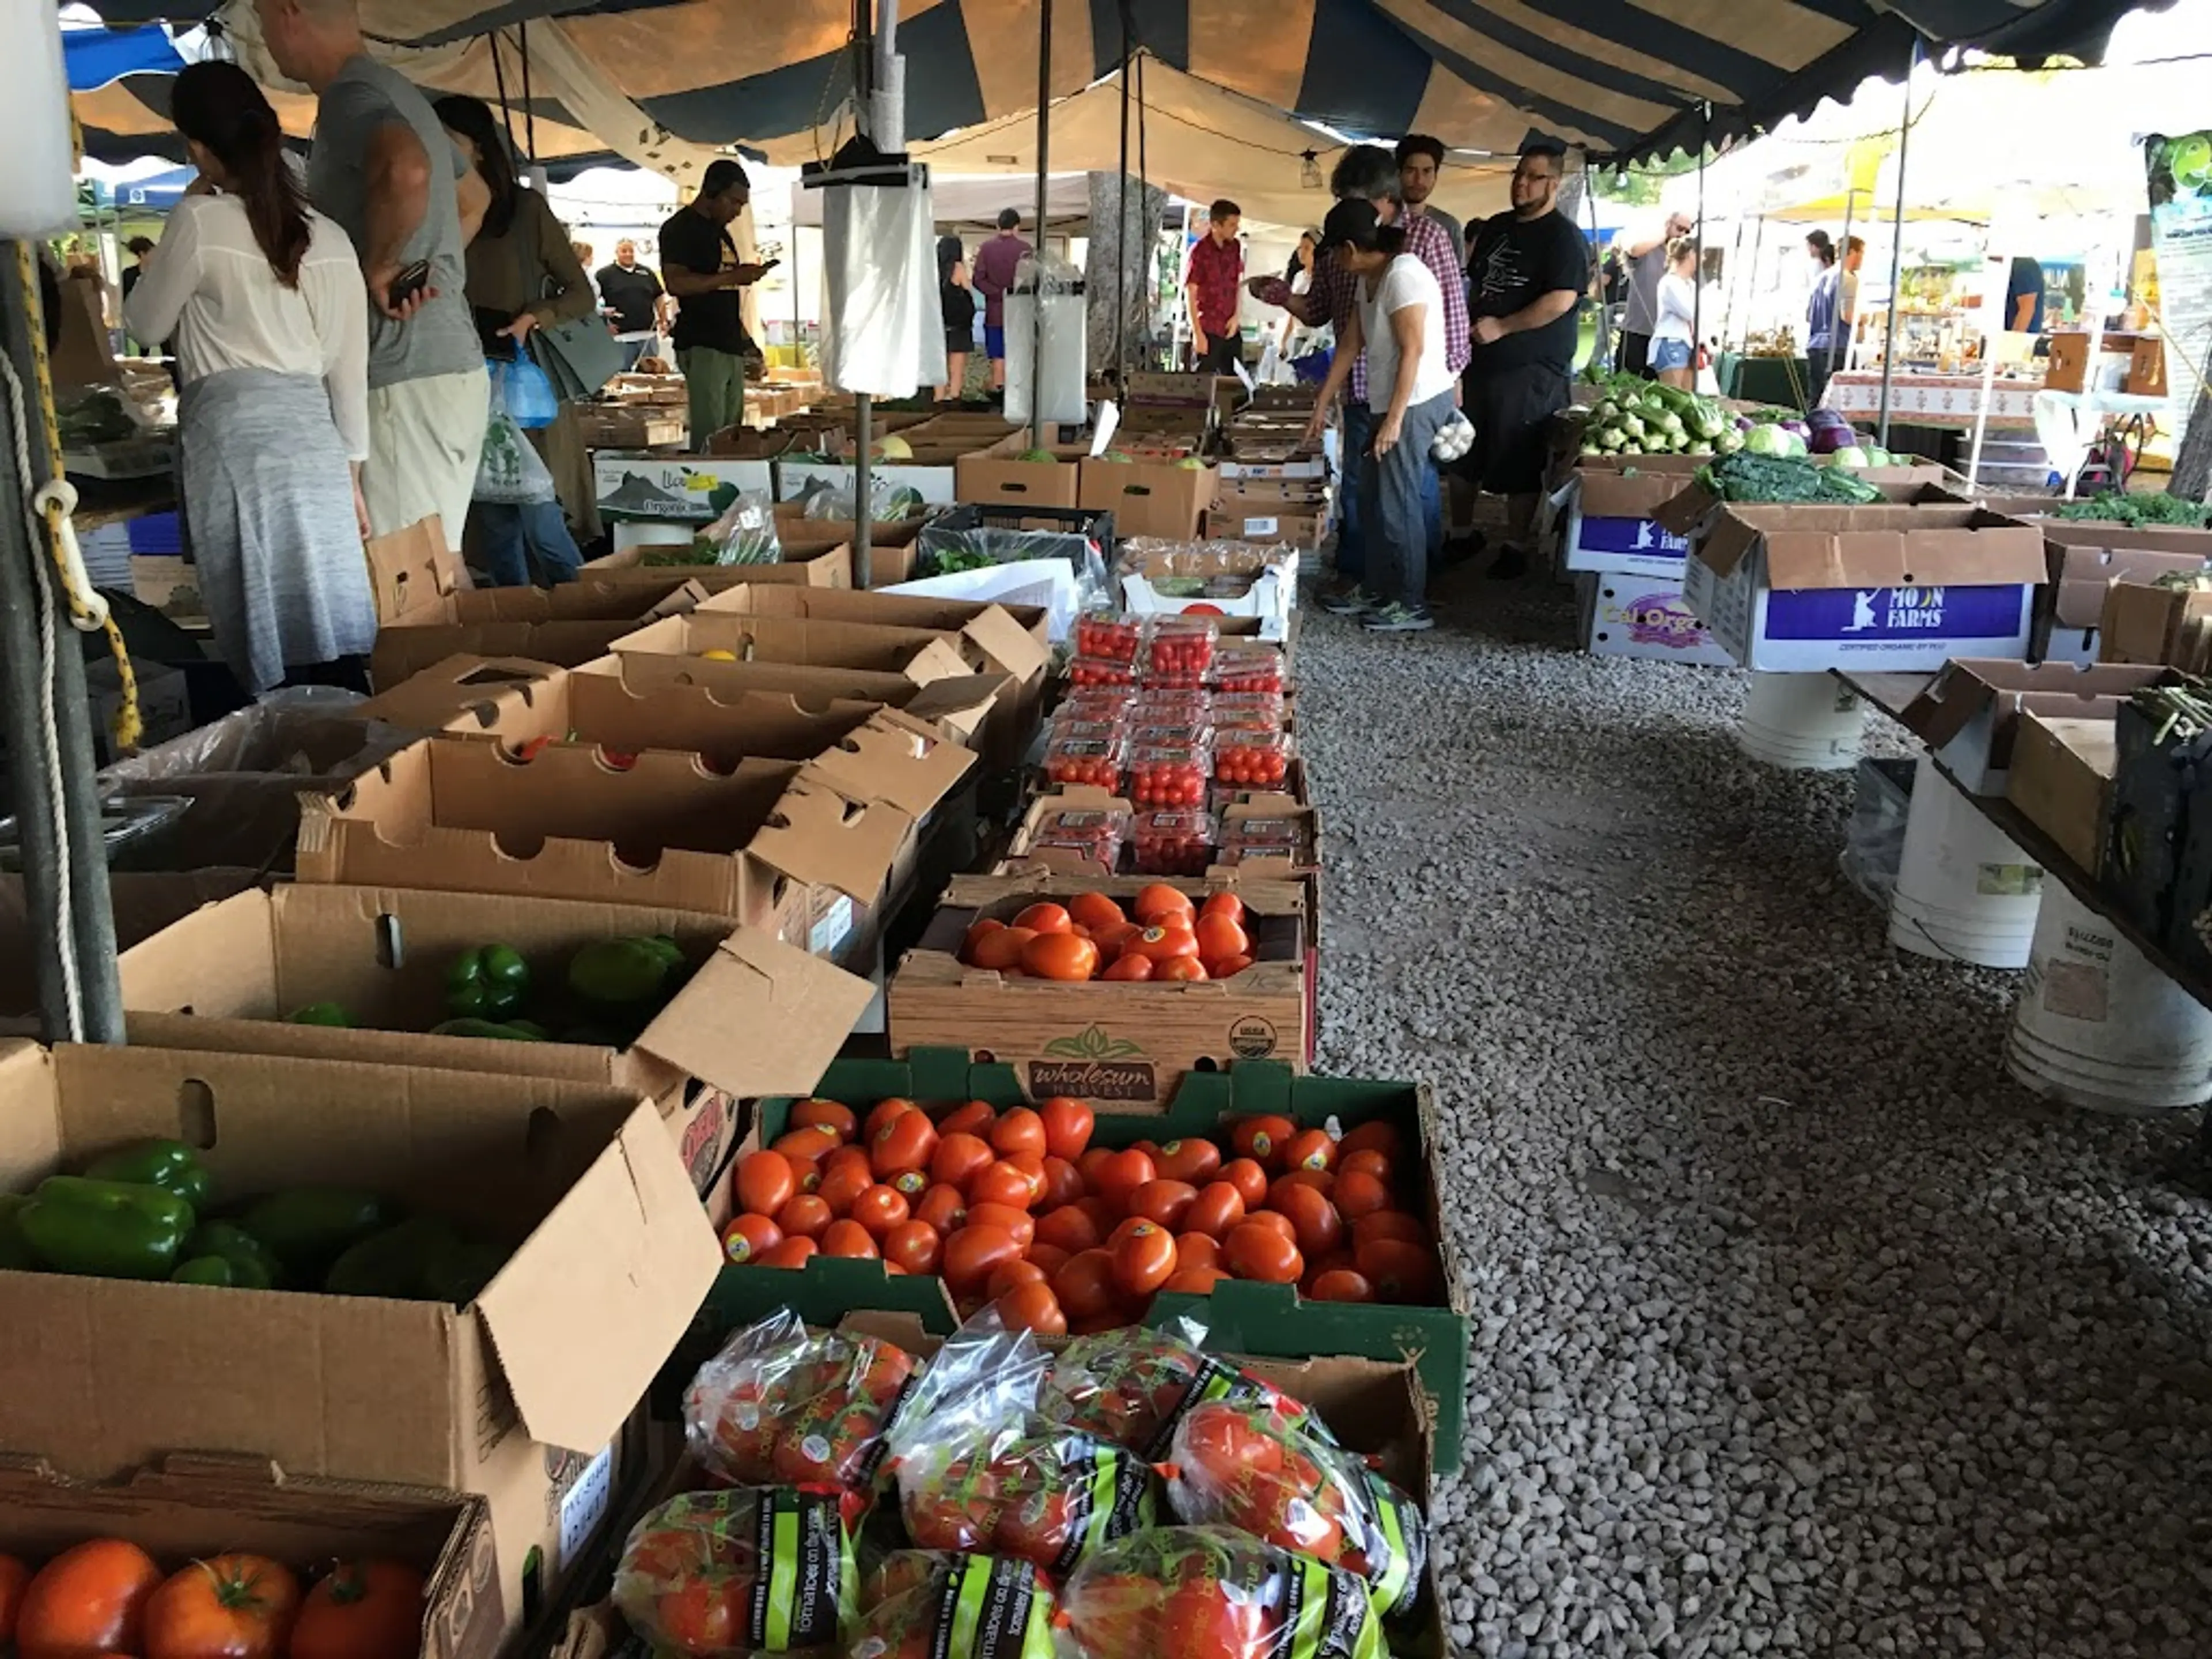 Farmers Market in Coconut Grove